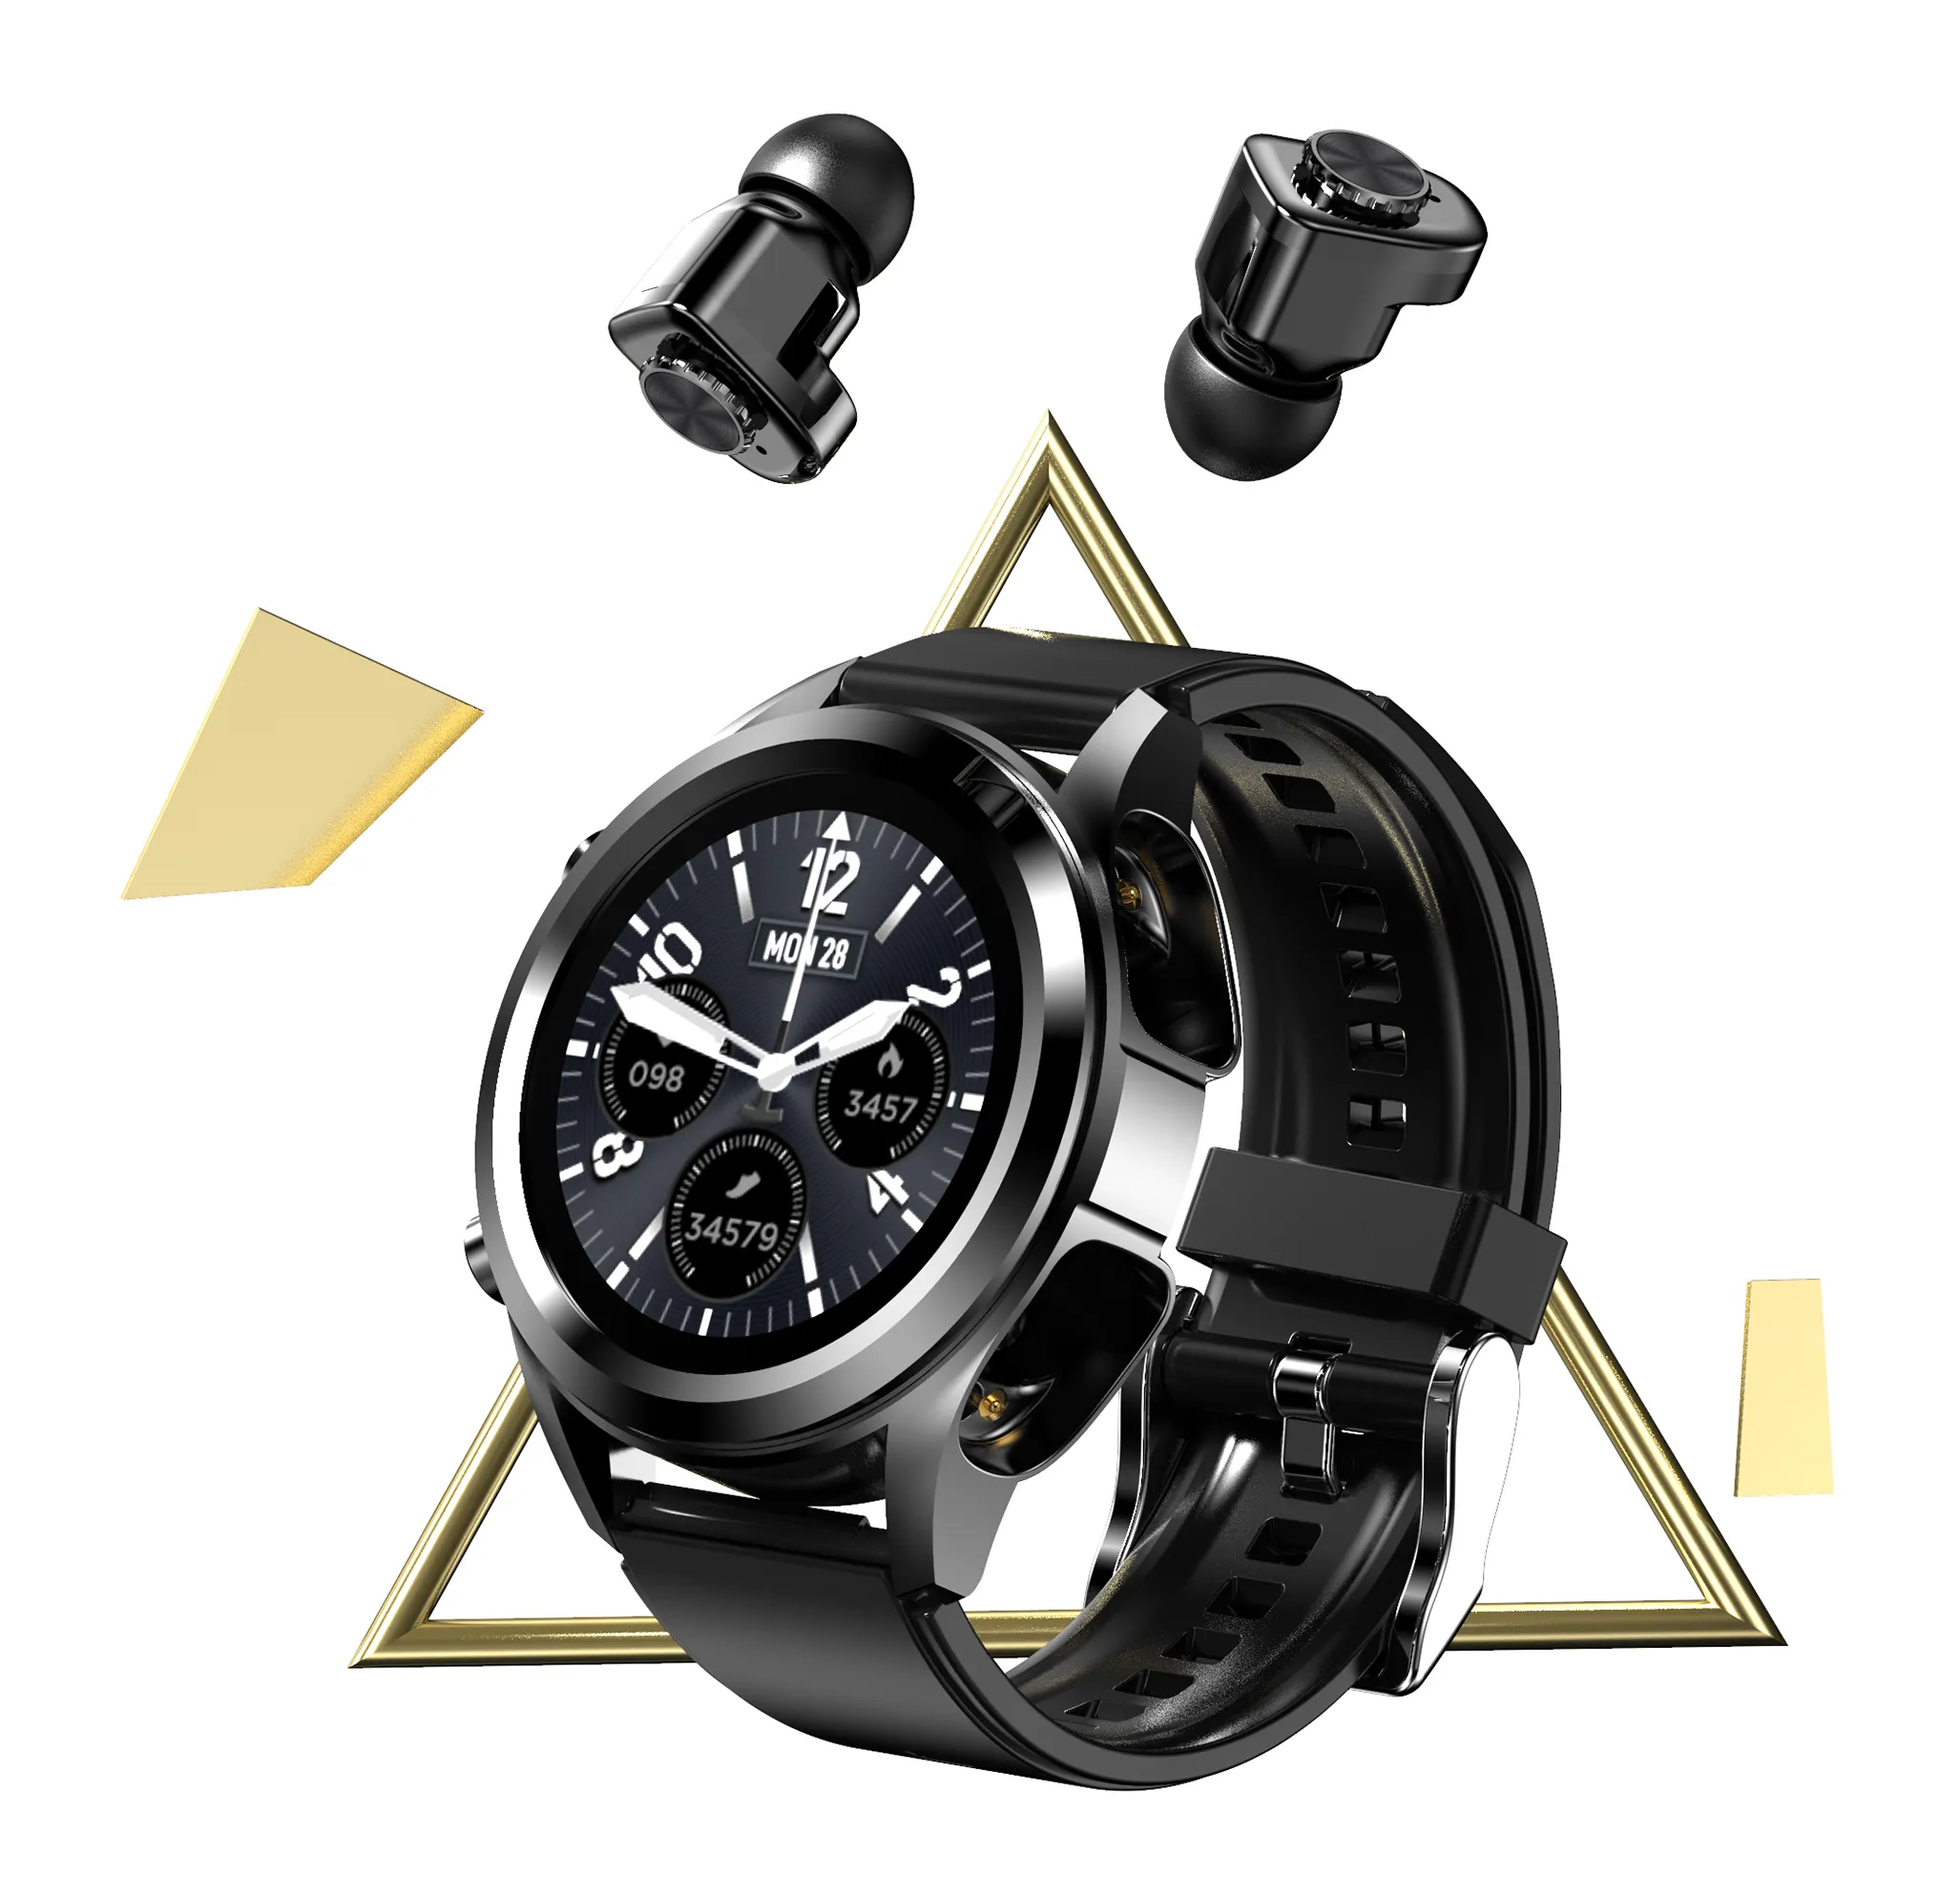 2022 New Arrival T10 Smart Watch Headphones With Wireless earbuds 2 In 1 For Men Sport Relojes Hombre Jm03 Smartwatch Earphone